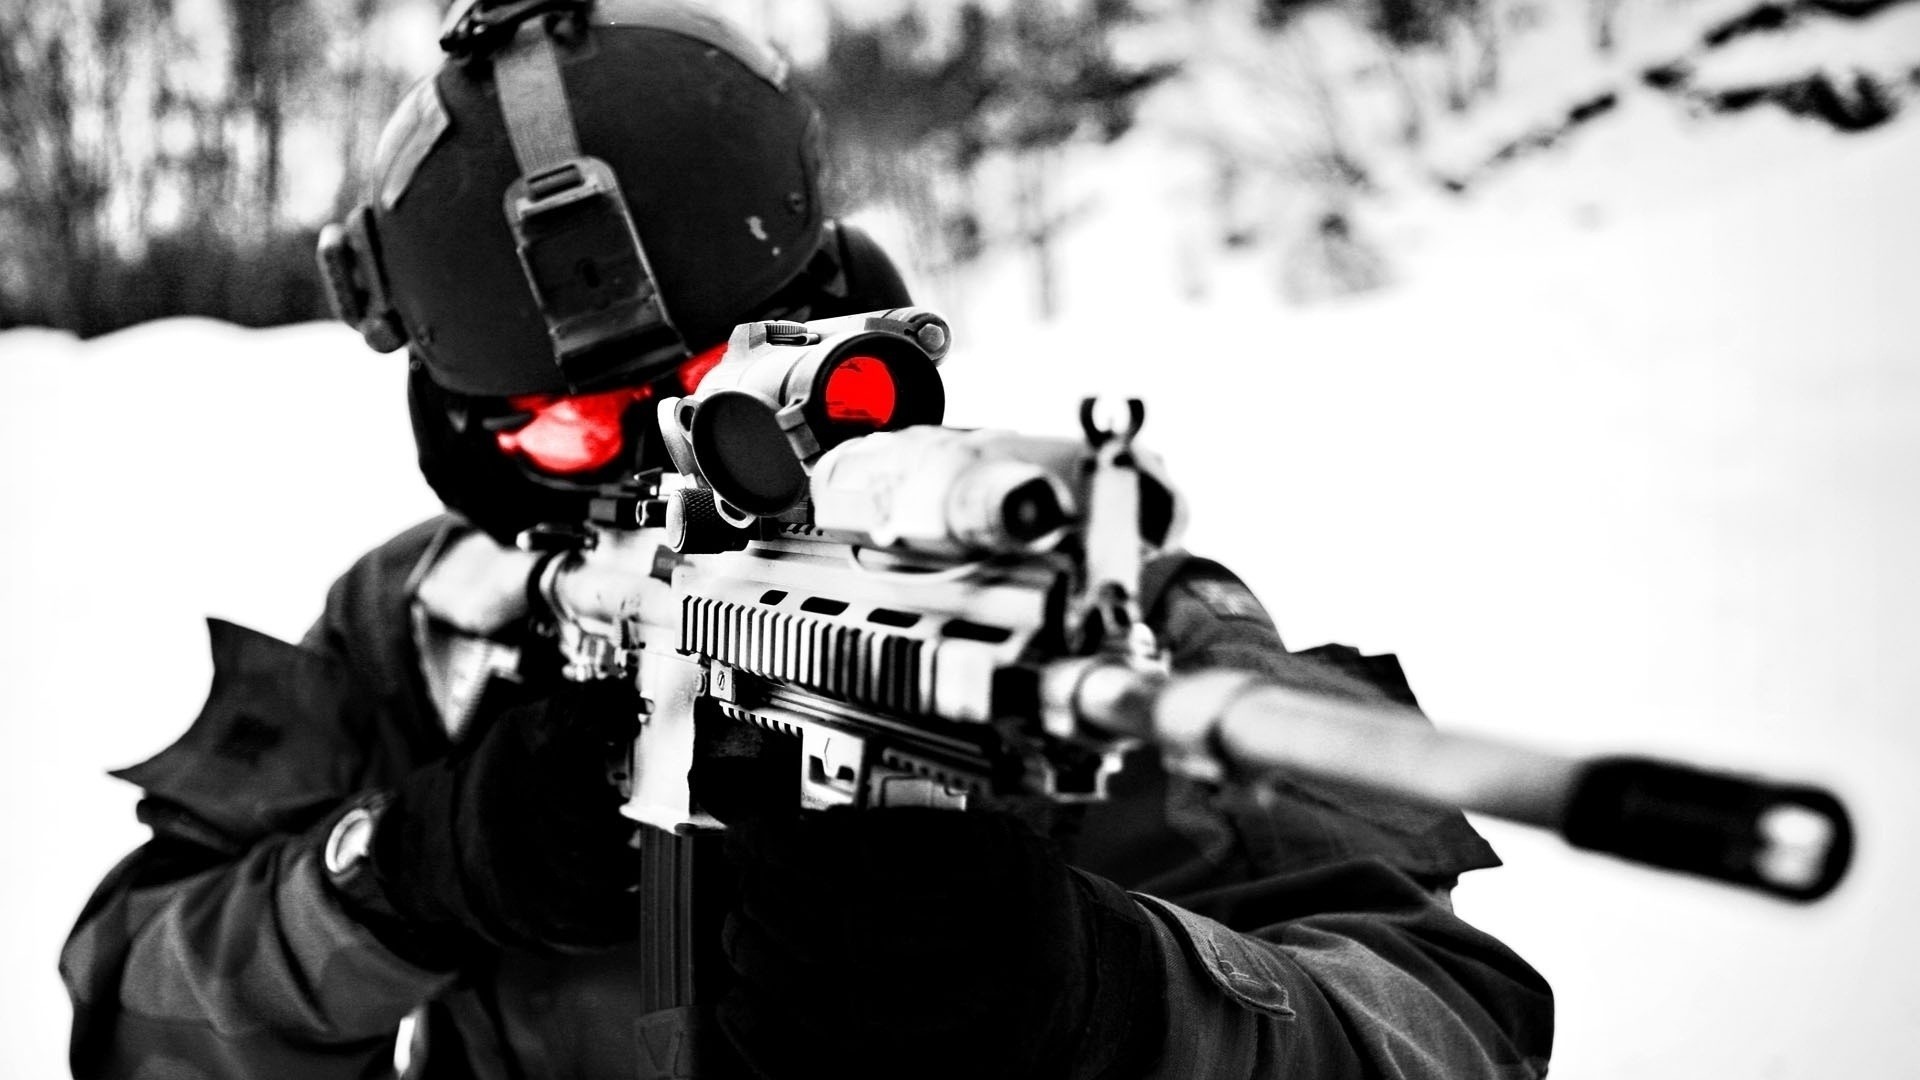 Call of Duty Black Ops Cold War Sniper Wallpaper 4k Ultra HD ID:6823